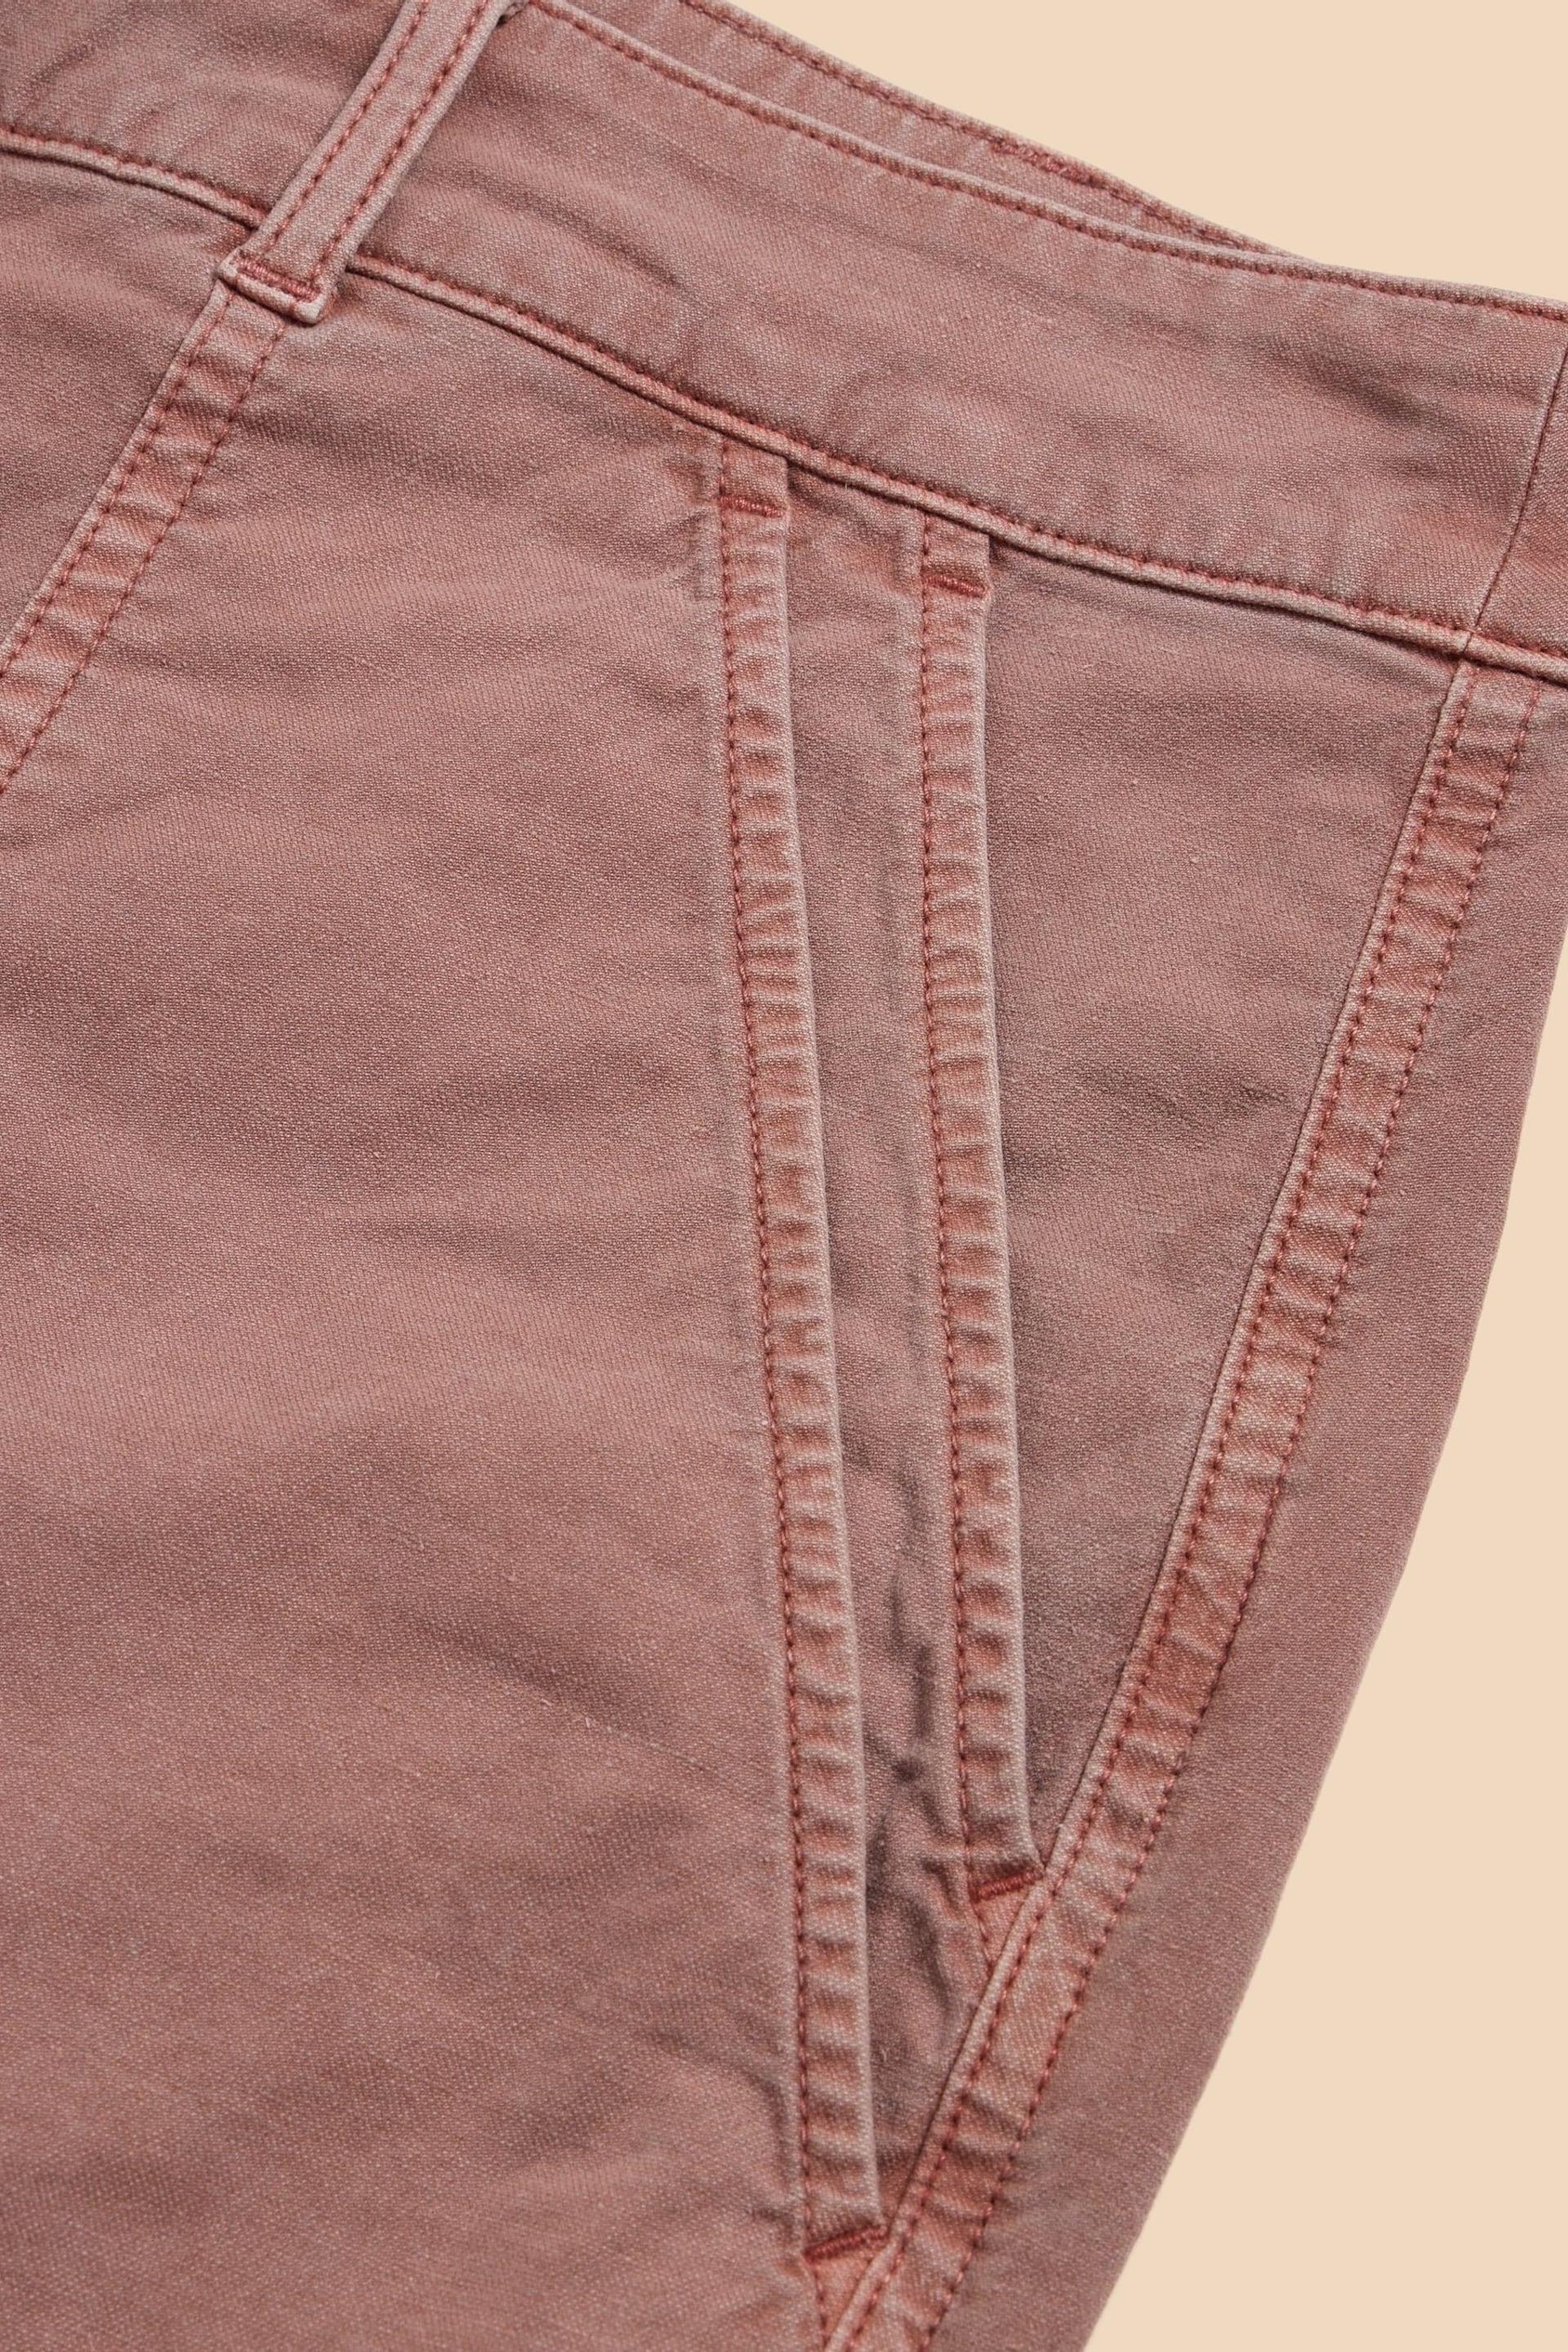 White Stuff Pink Twister Chino Trousers - Image 6 of 6